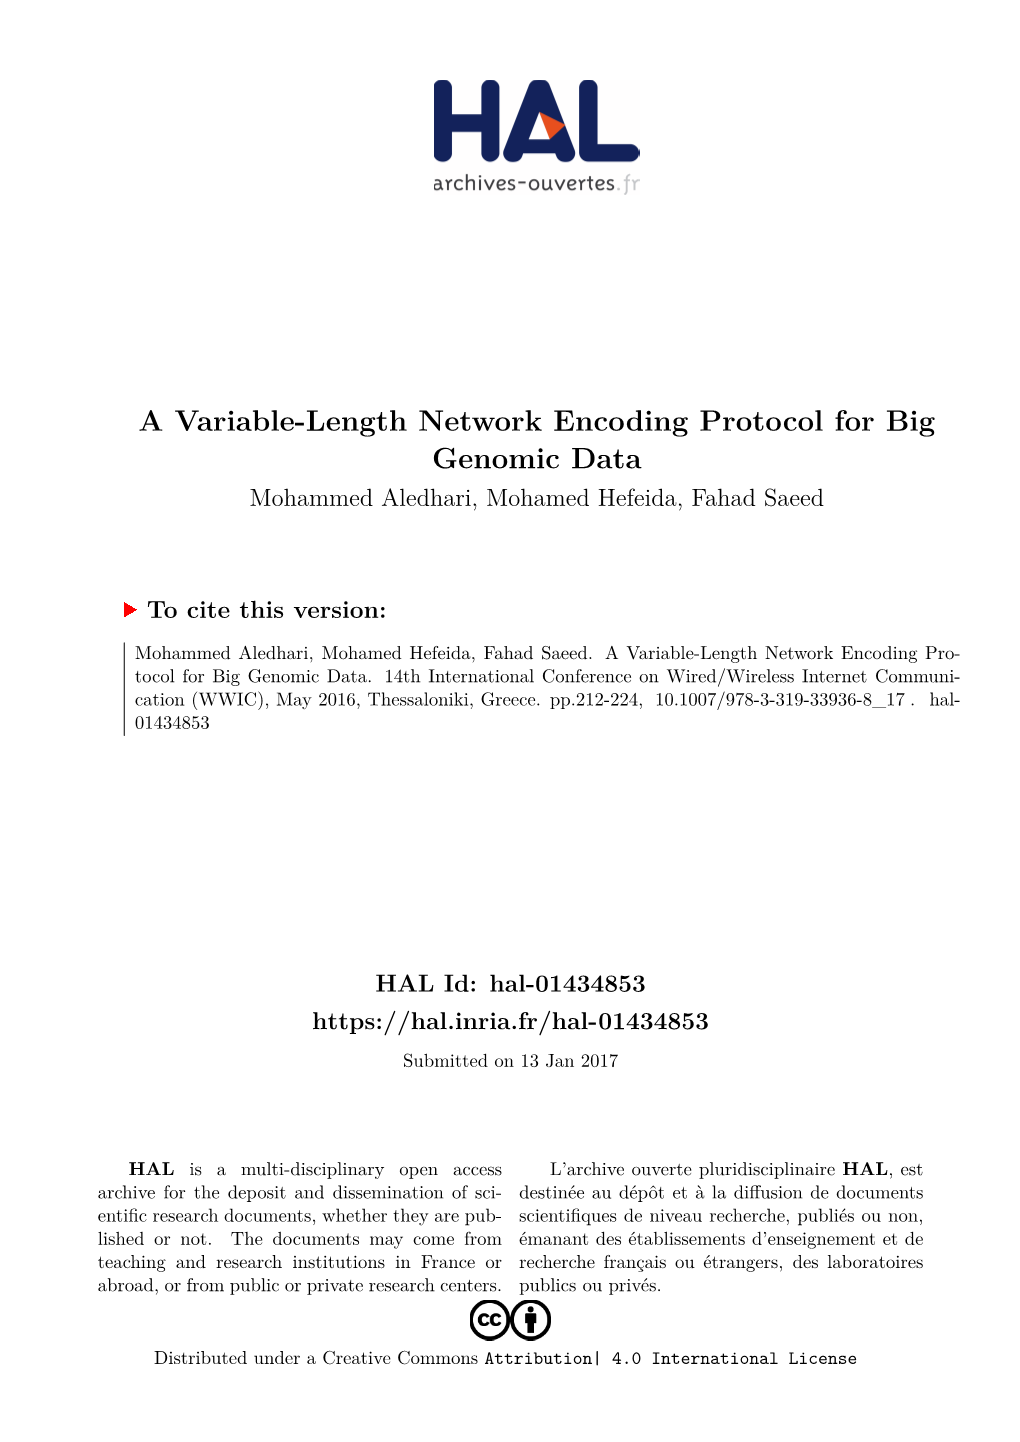 A Variable-Length Network Encoding Protocol for Big Genomic Data Mohammed Aledhari, Mohamed Hefeida, Fahad Saeed